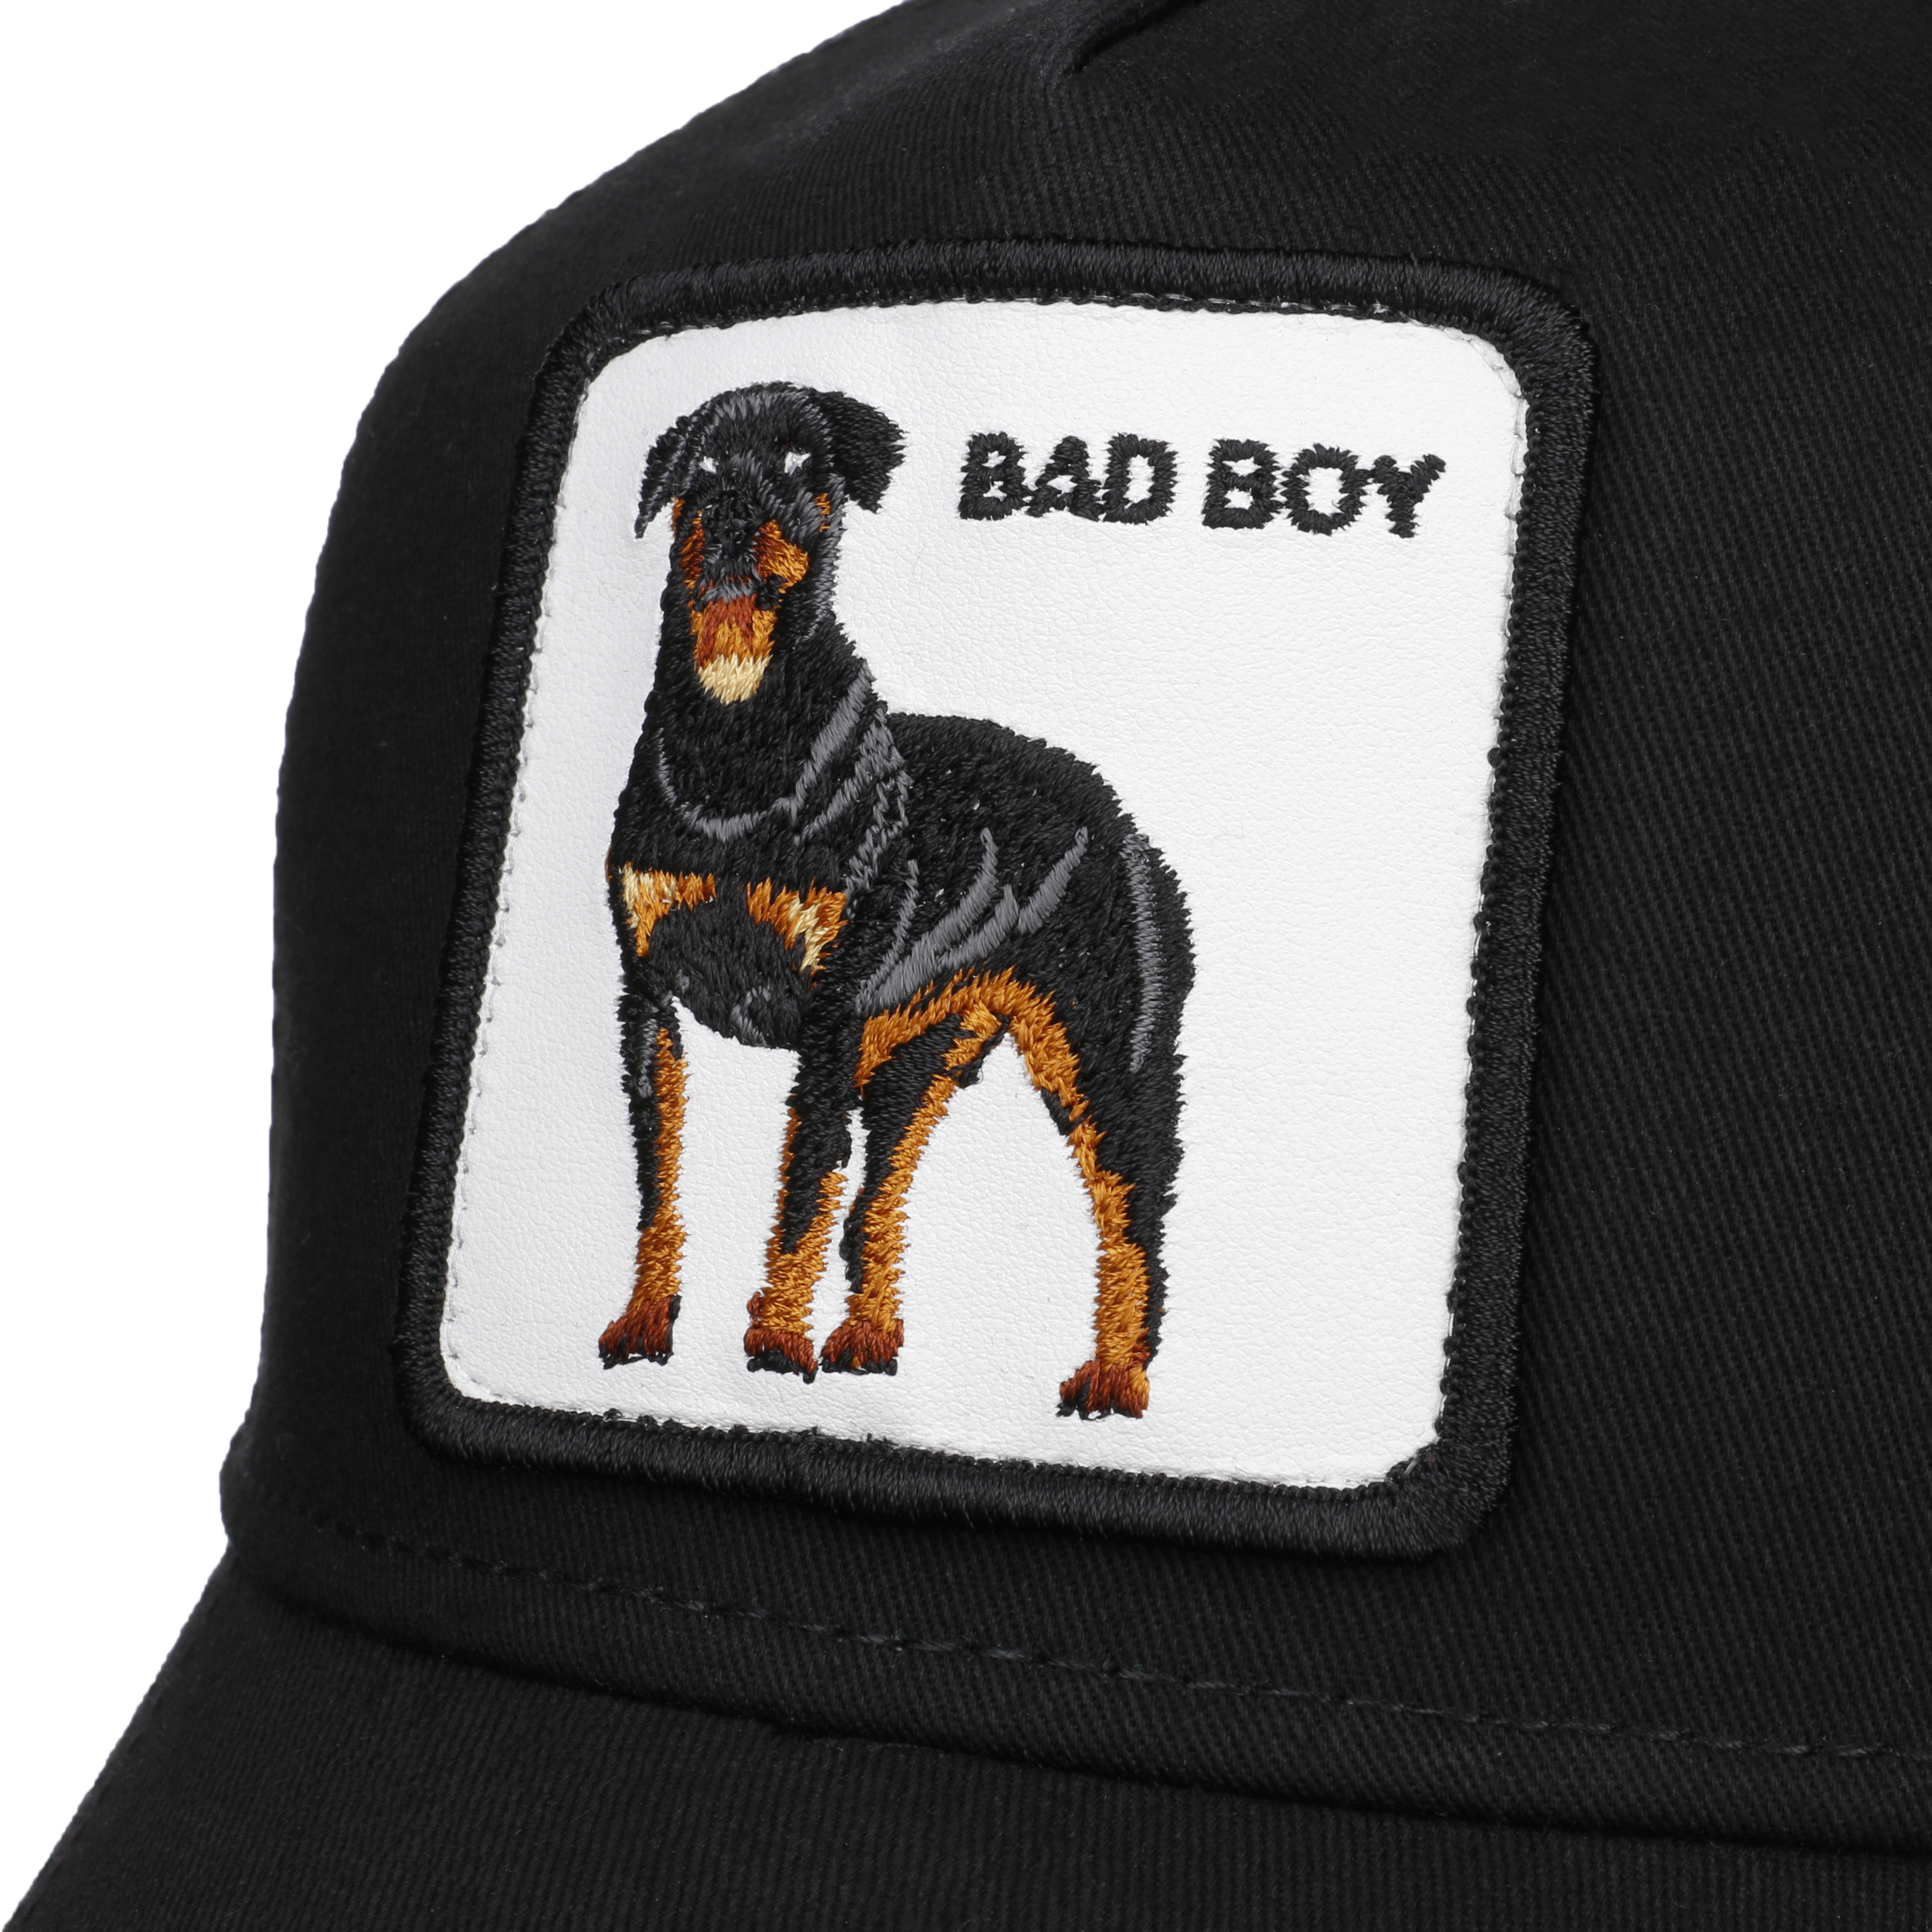 The Baddest Boy Cap by Goorin Bros. - 53,95 €